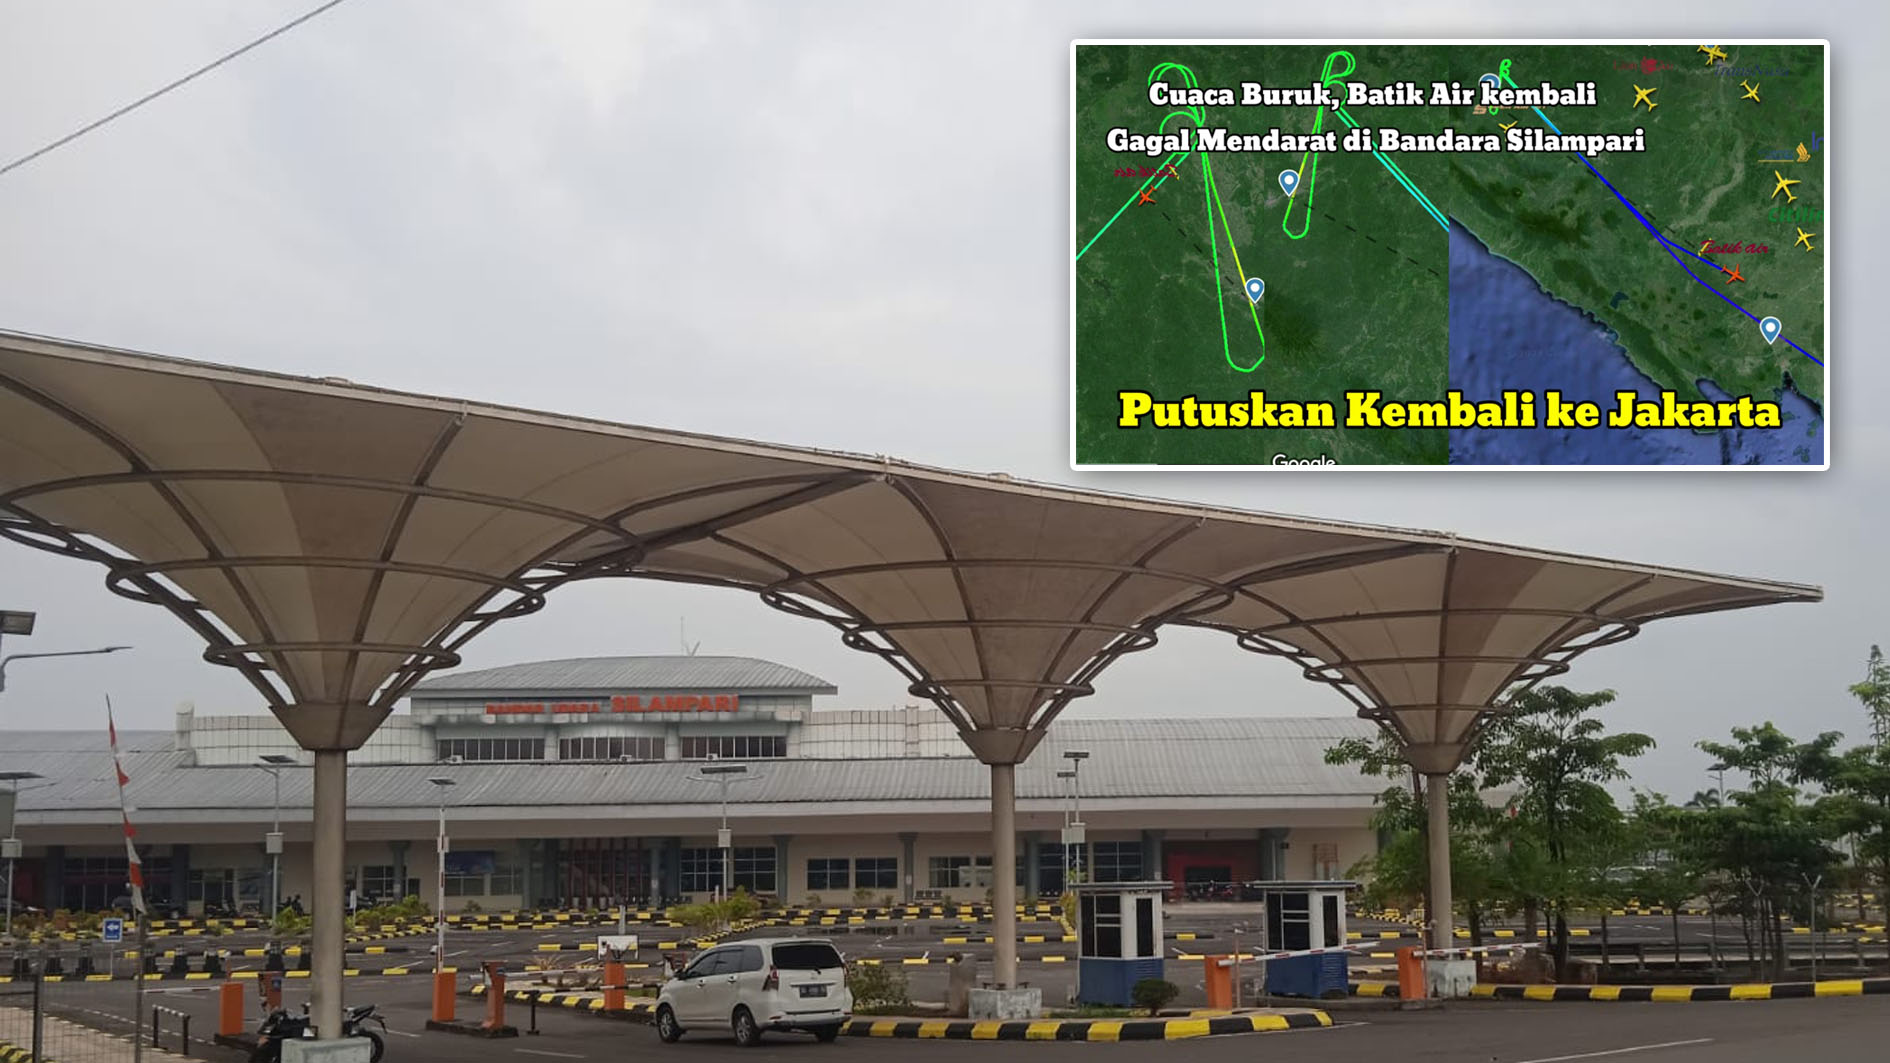 Cuaca Kurang Baik, Pesawat Batik Air Gagal Mendarat di Bandara Silampari dan Kembali ke Jakarta